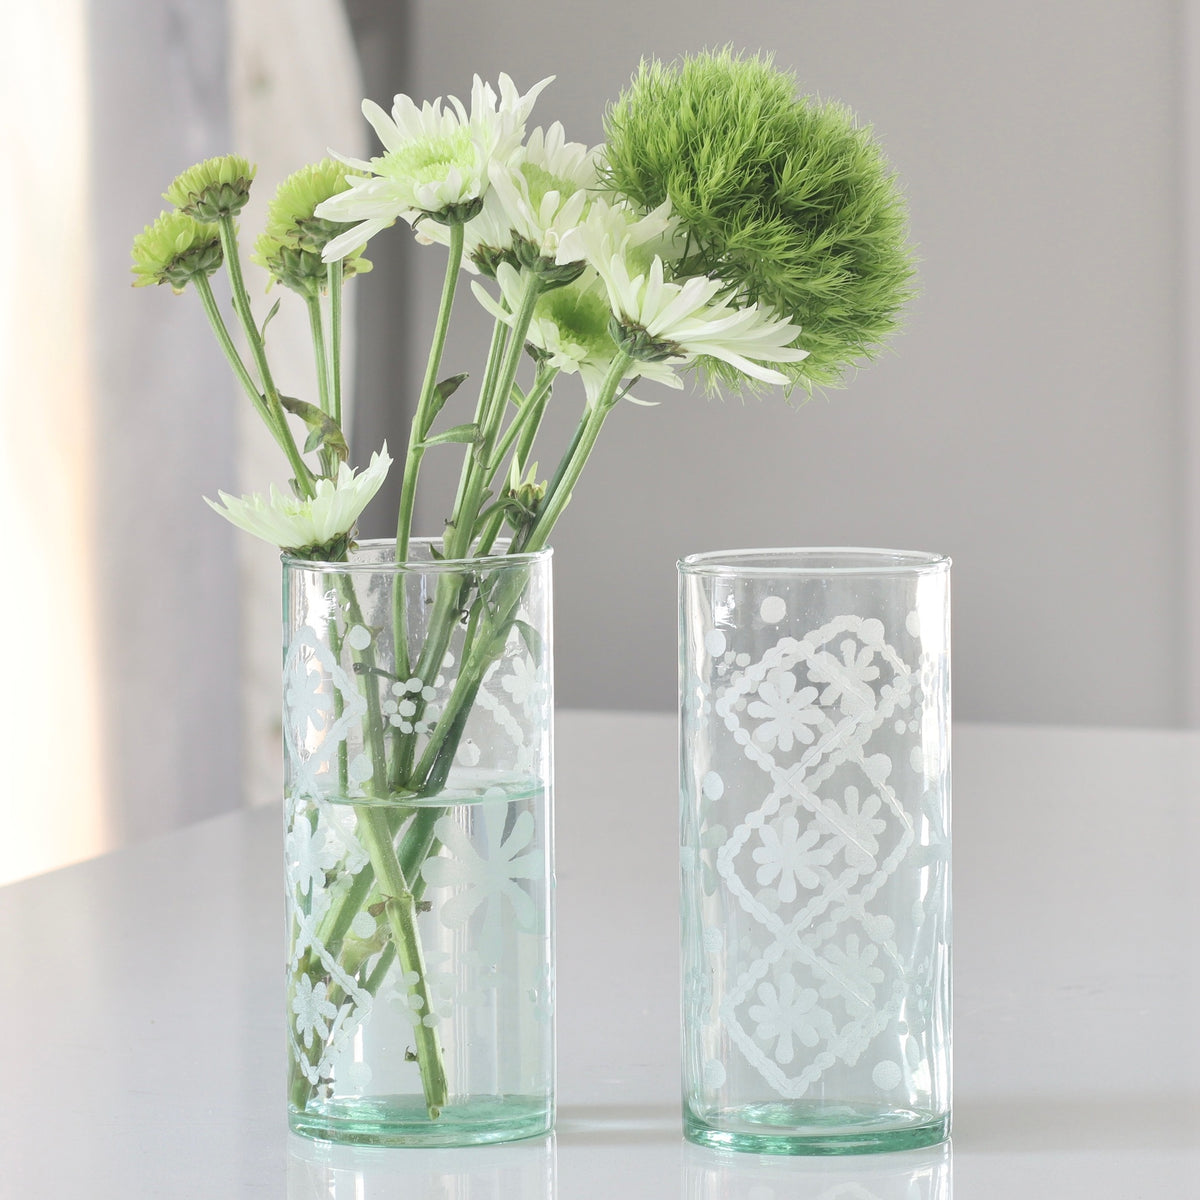 Secret Garden Etched Recycled Glass Vase - Small - Holistic Habitat 